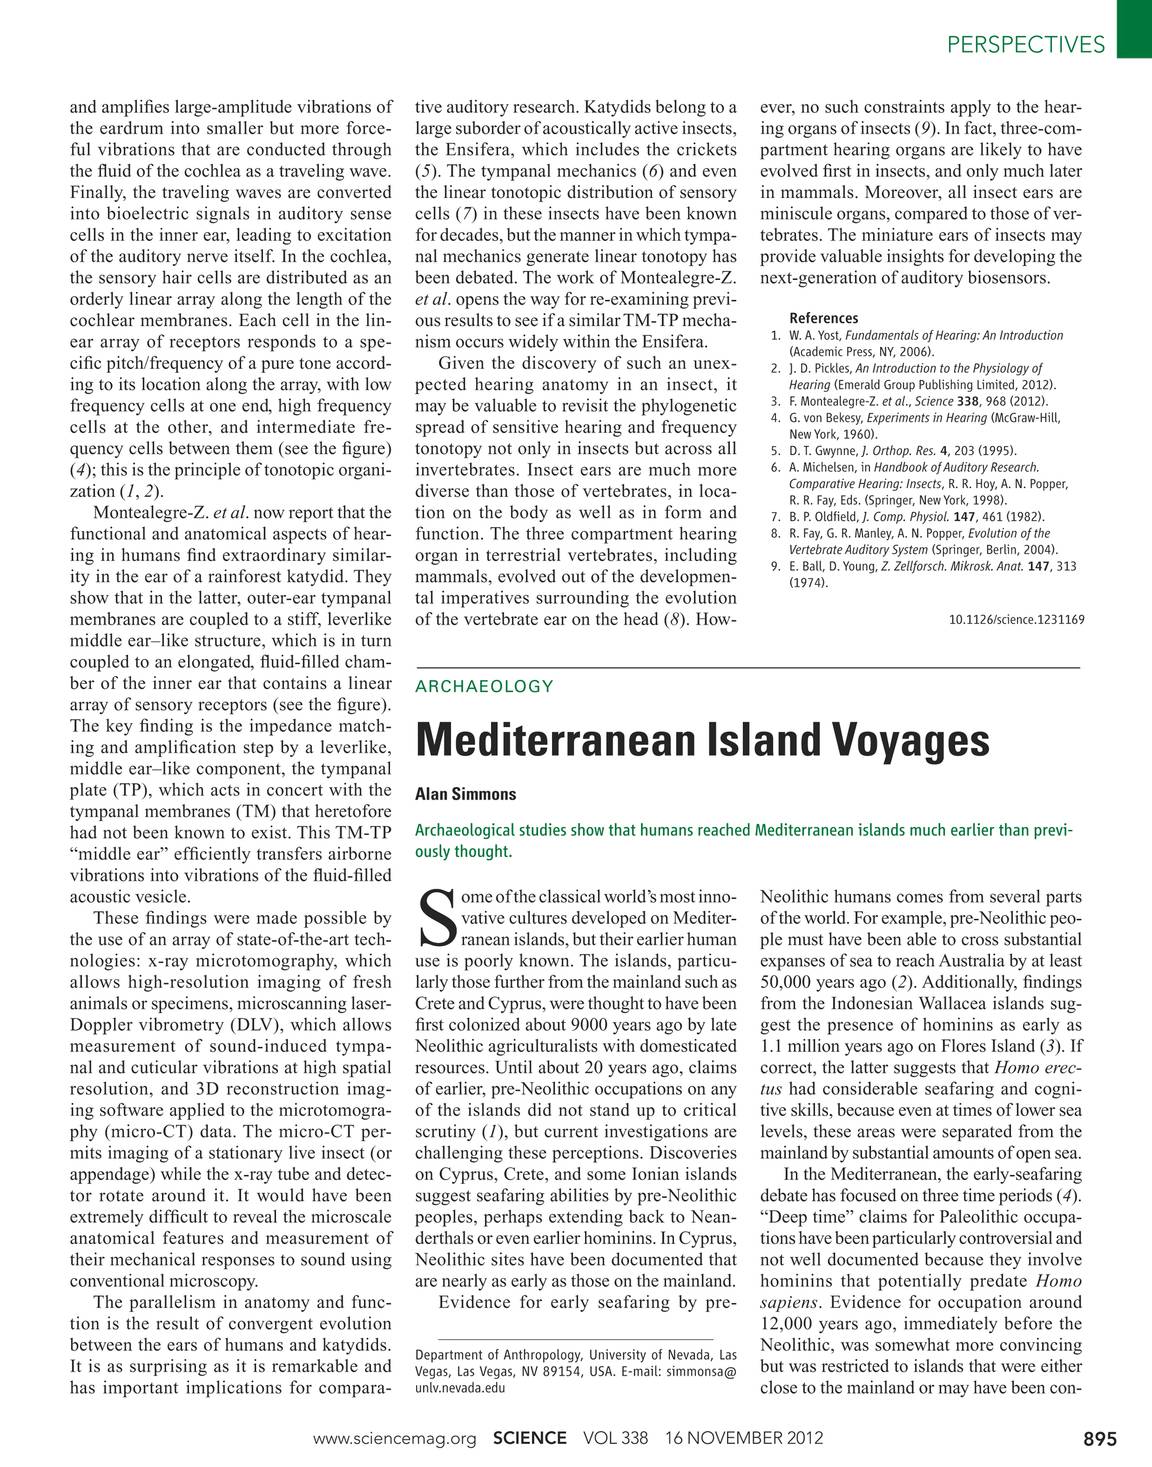 Science Magazine 16 November 2012 Page 894